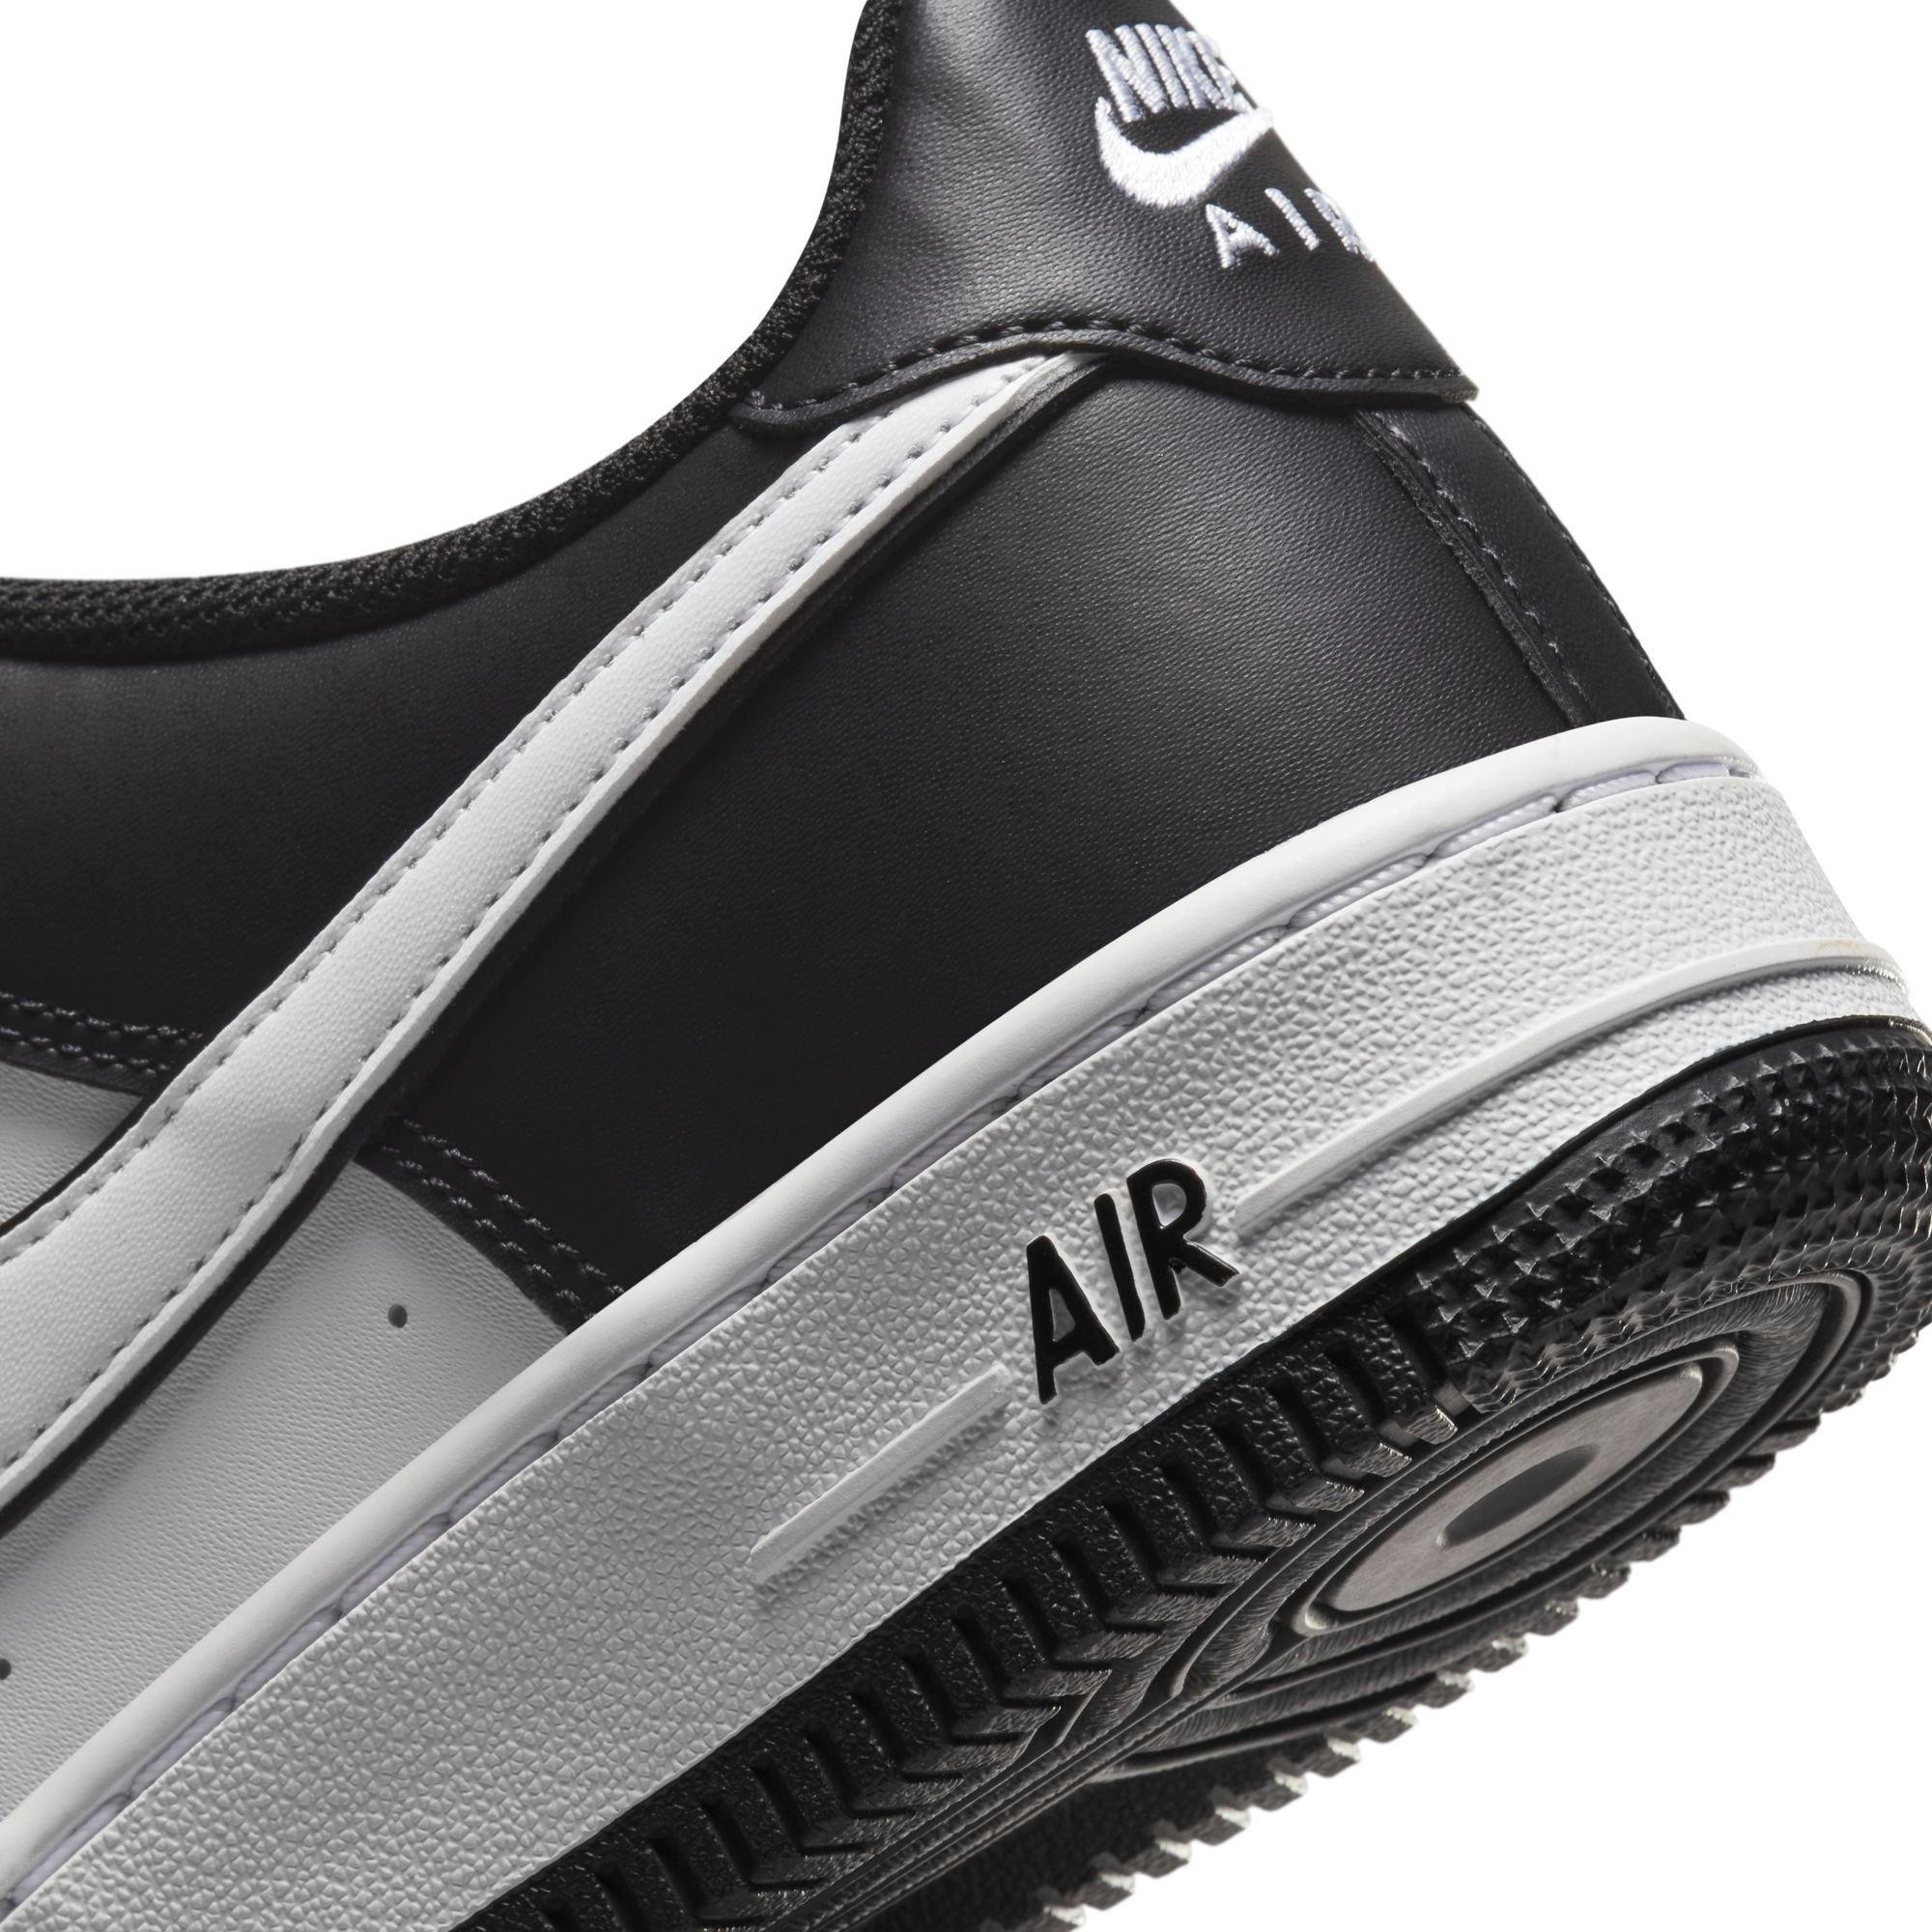 Nike Air Force 1 LV8 2 GS - Black/Black/White • Price »